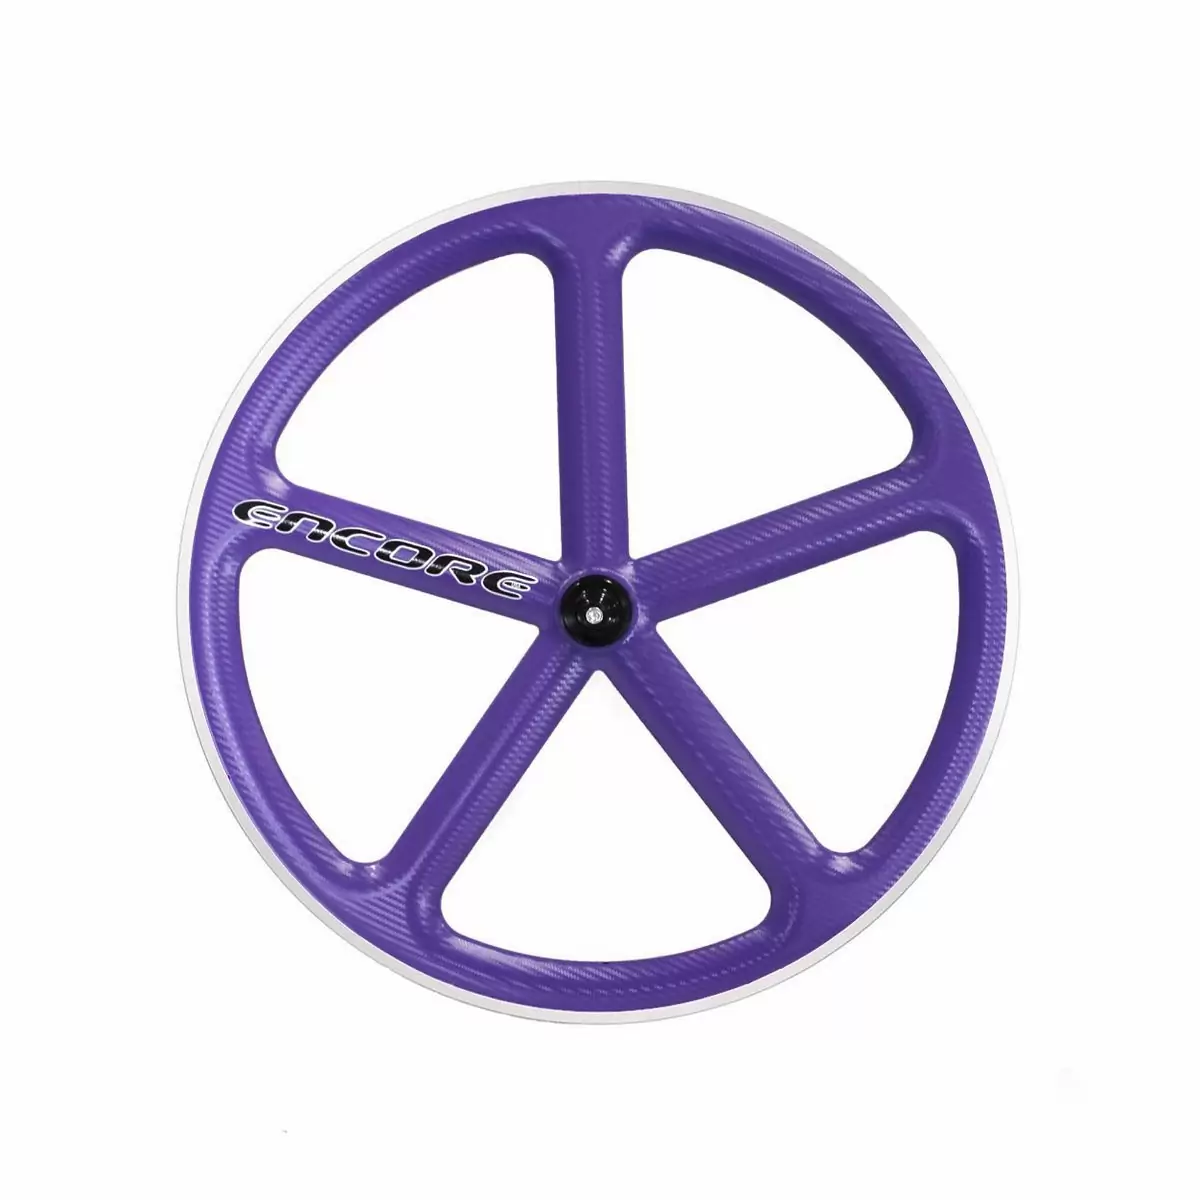 rear wheel 700c track 5 spokes carbon weave purple msw - image